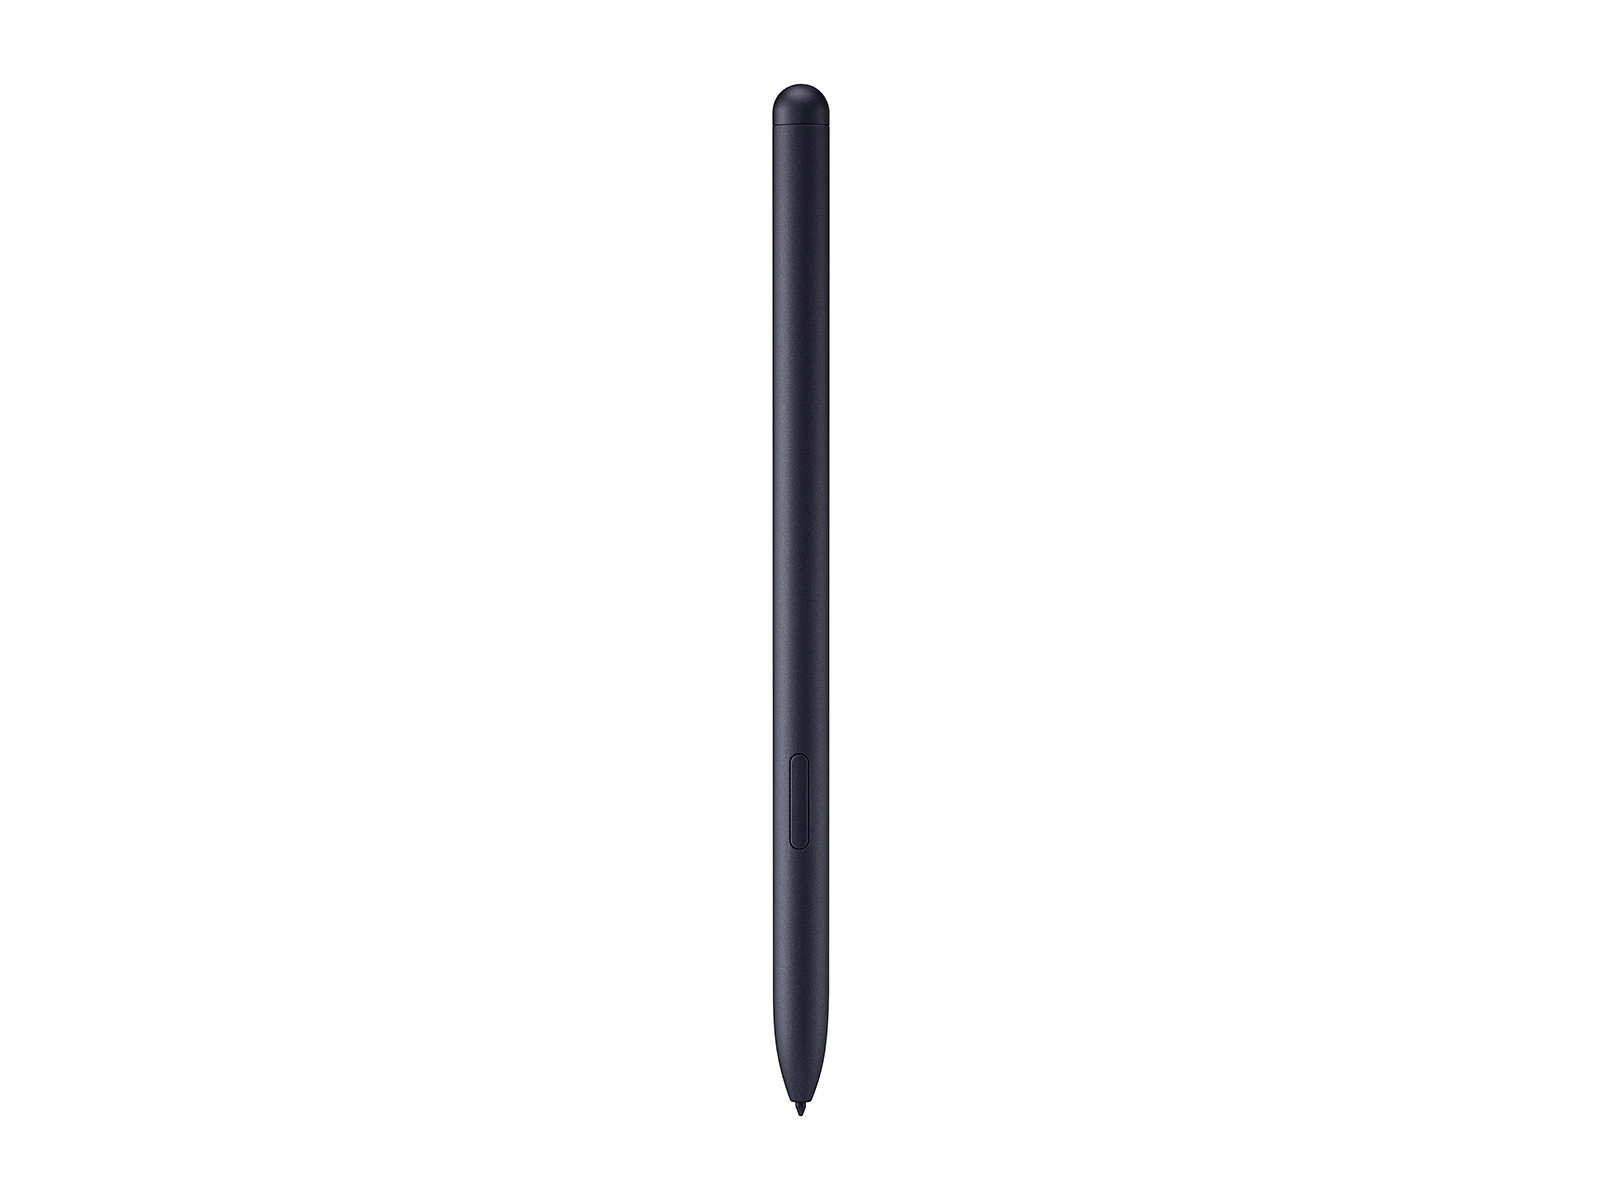 Samsung Galaxy Tab S7 (5G Tablet) LTE/WiFi (T-Mobile), Mystic Black - 128  GB (2020 Model - US Version & Warranty) - SM-T878UZKATMB (Renewed)